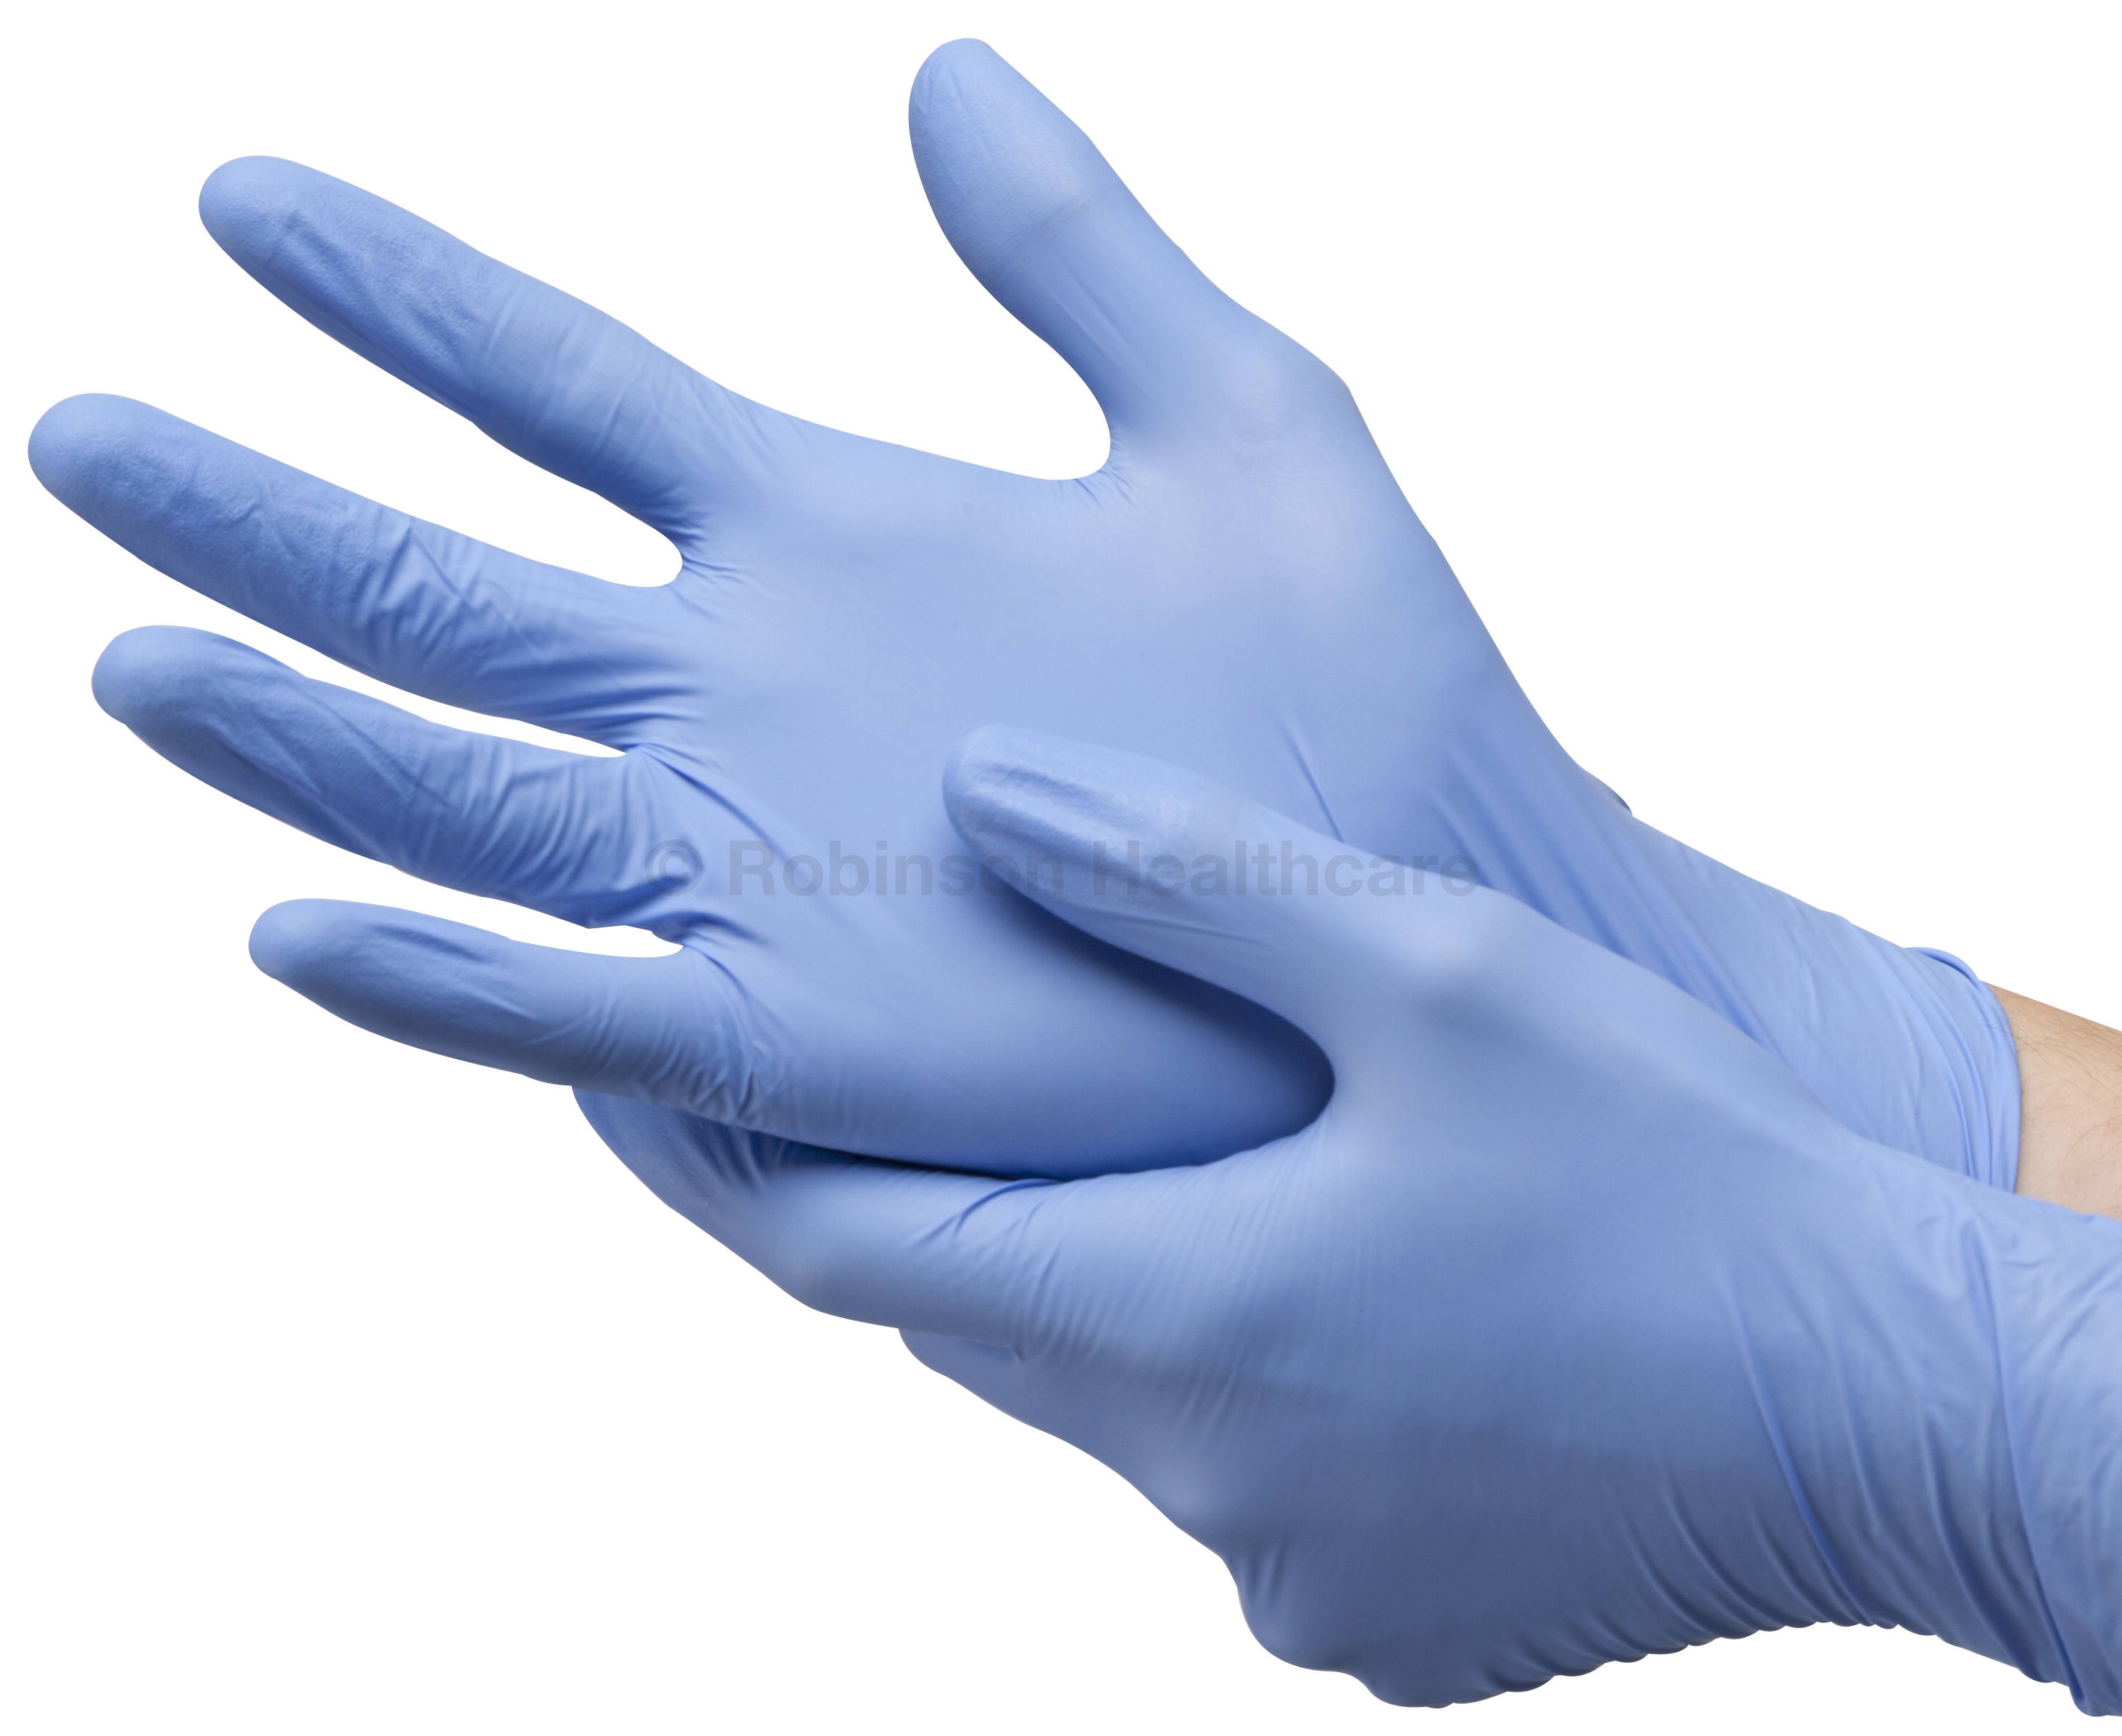 Hospital gloves clipart